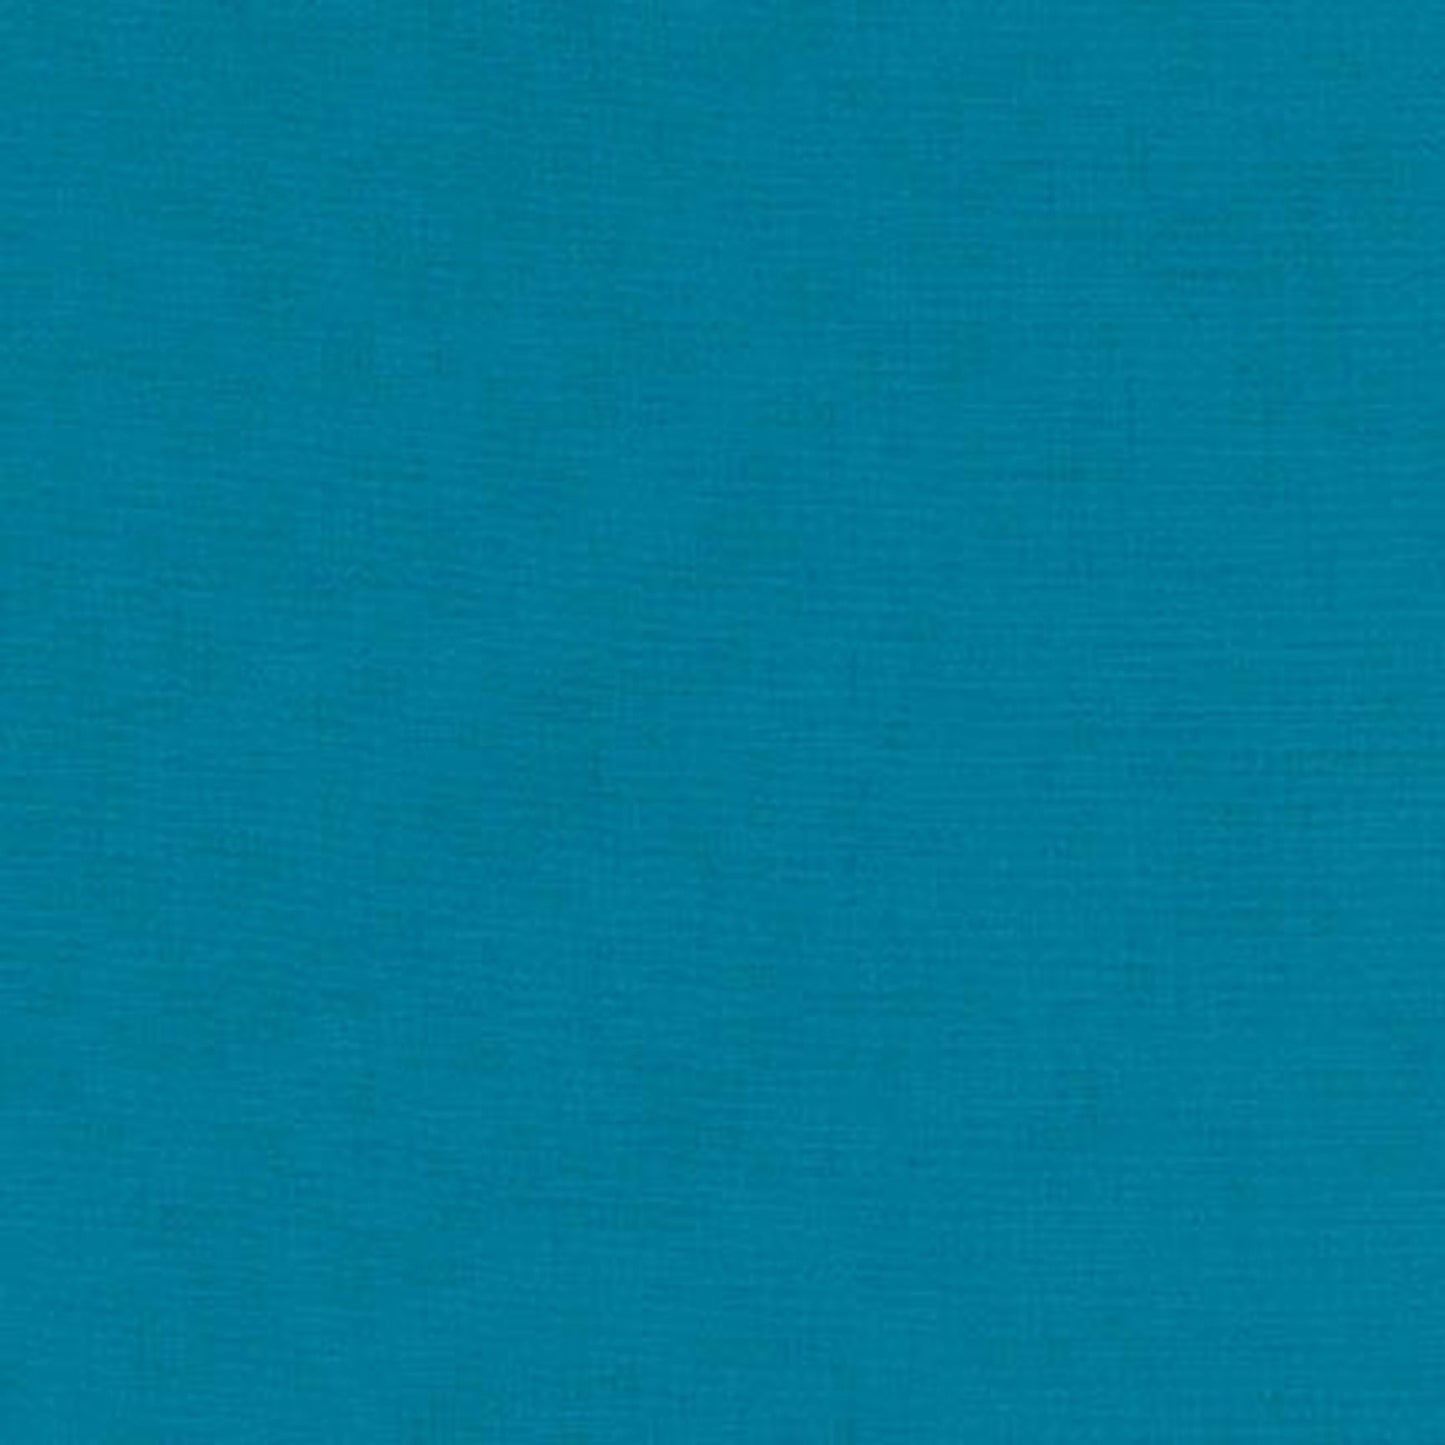 Kona Cotton Fabric - Mediterranean - Teal / Turquoise Blue